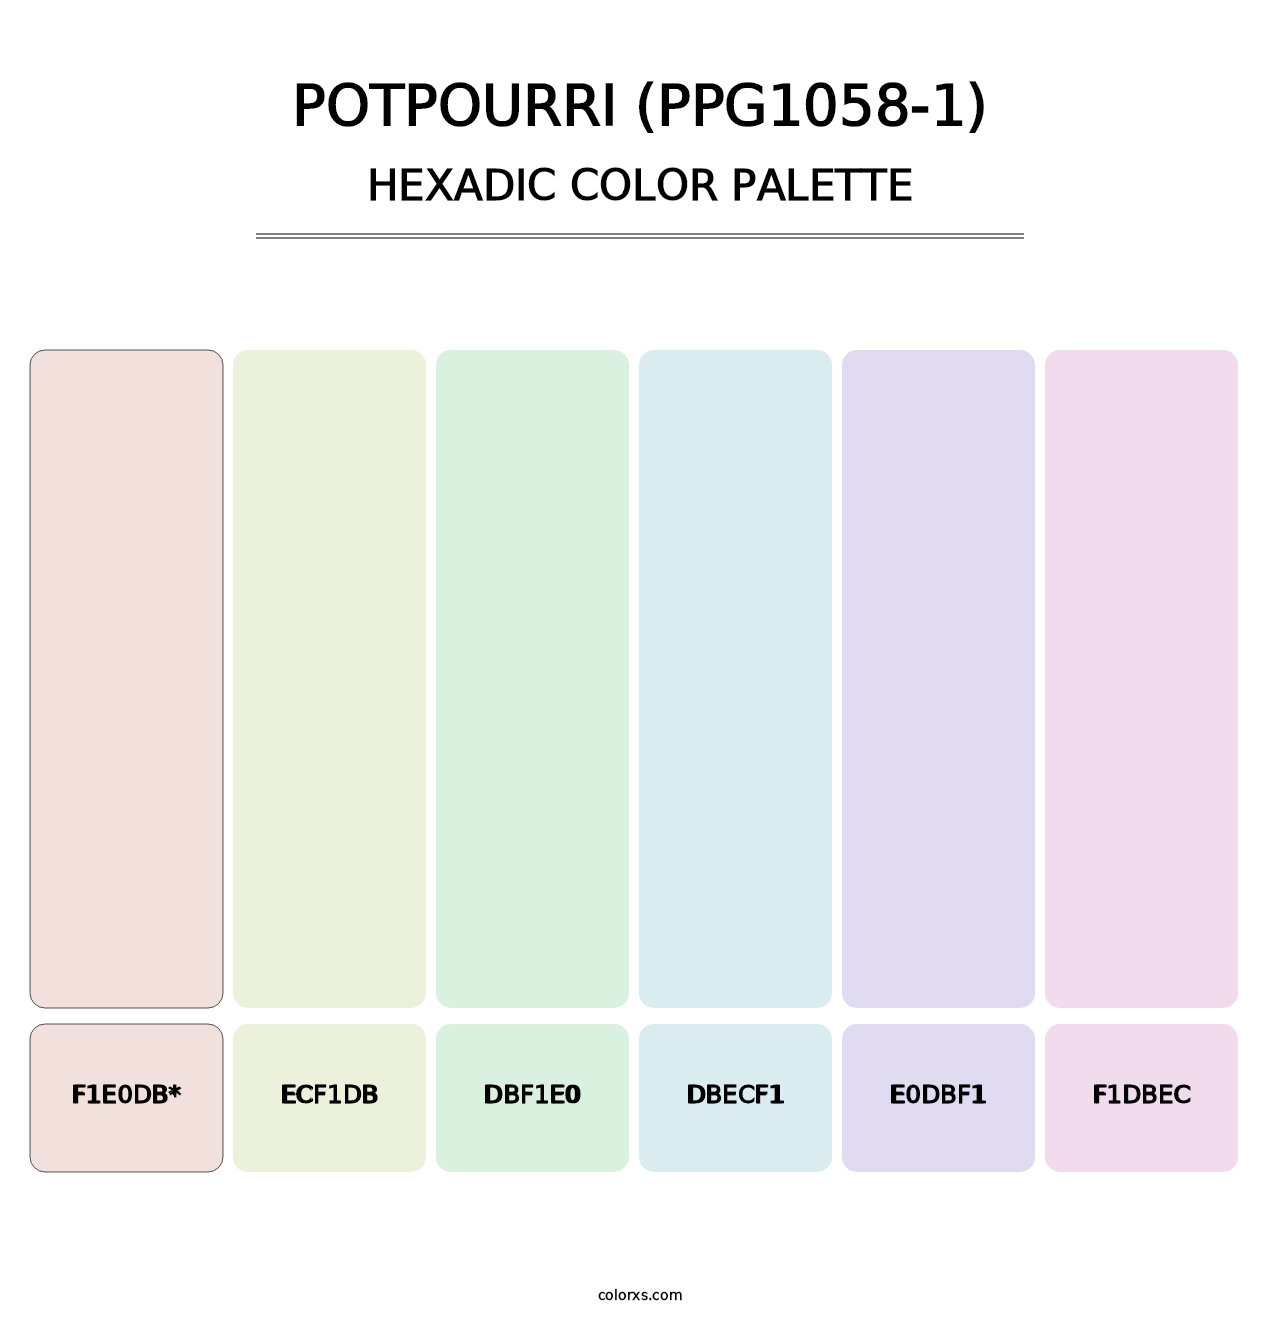 Potpourri (PPG1058-1) - Hexadic Color Palette